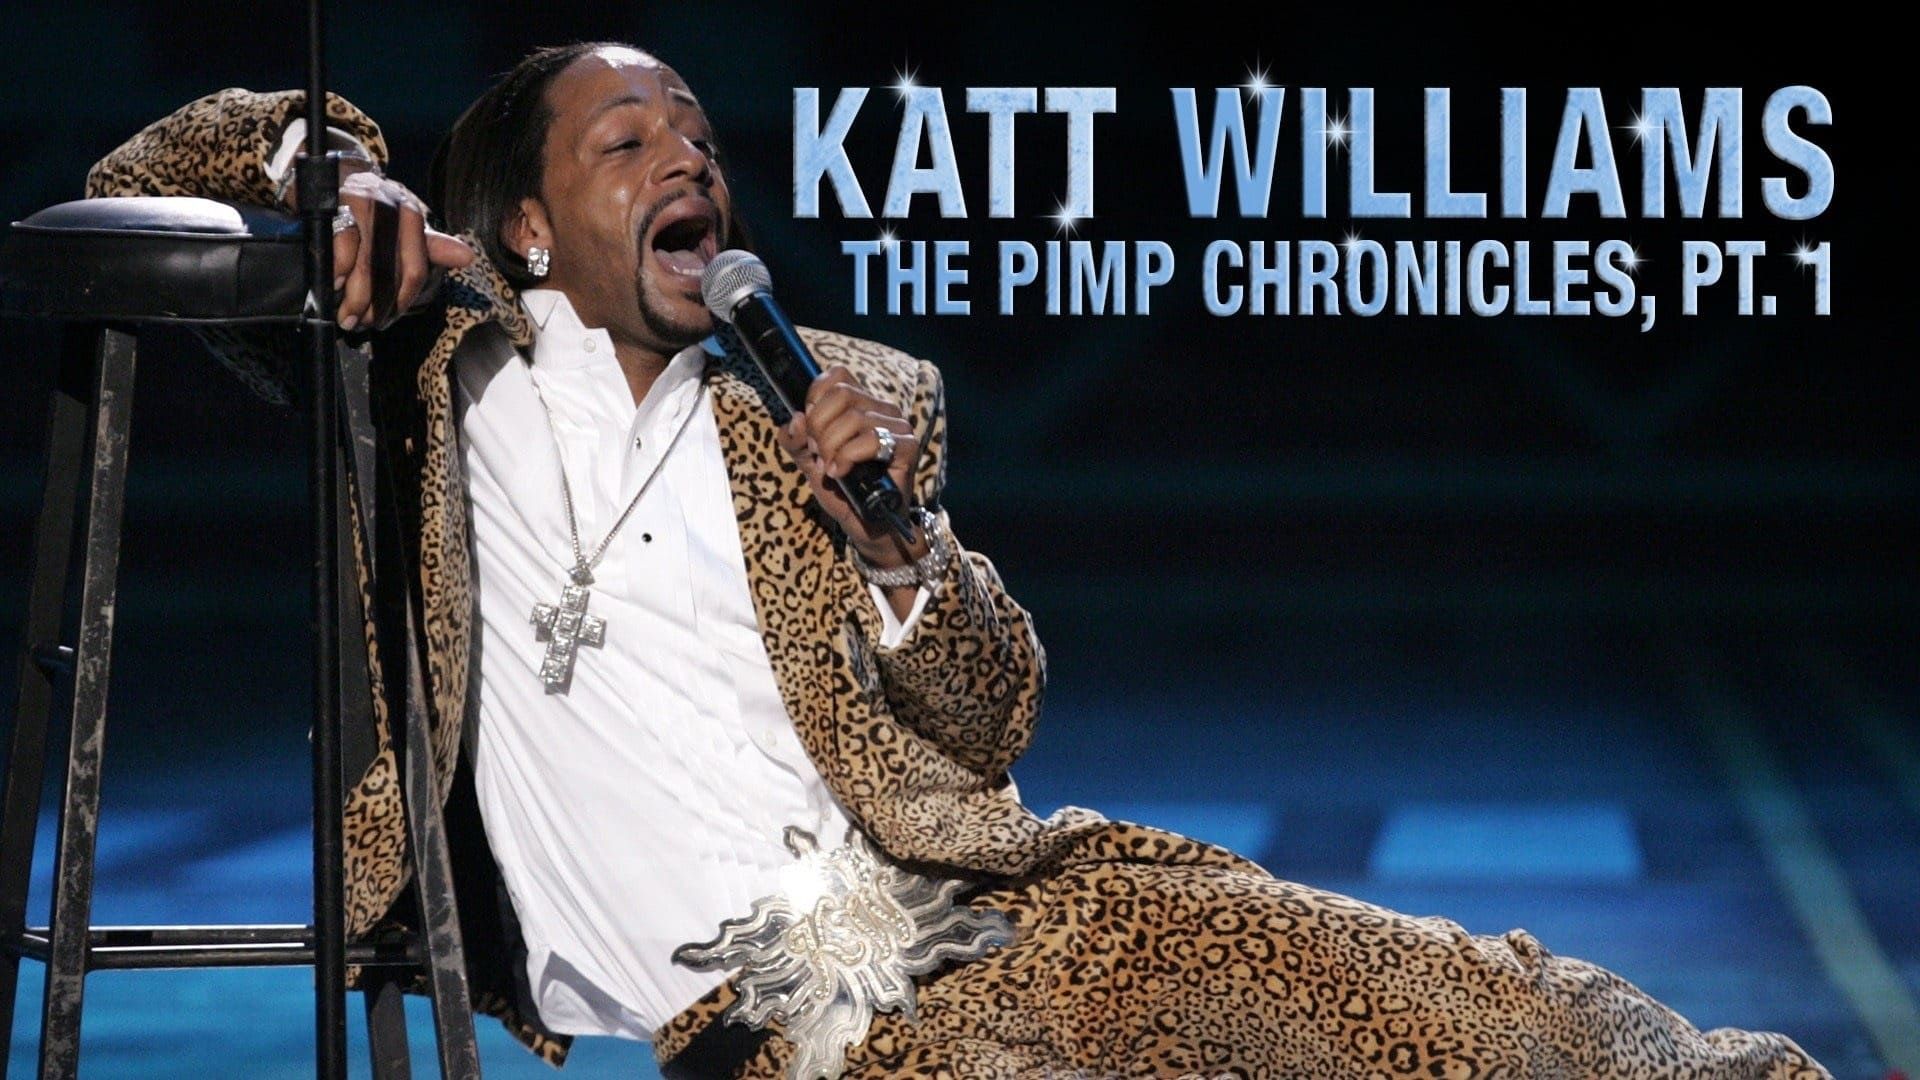 Katt Williams: The Pimp Chronicles Pt. 1 background